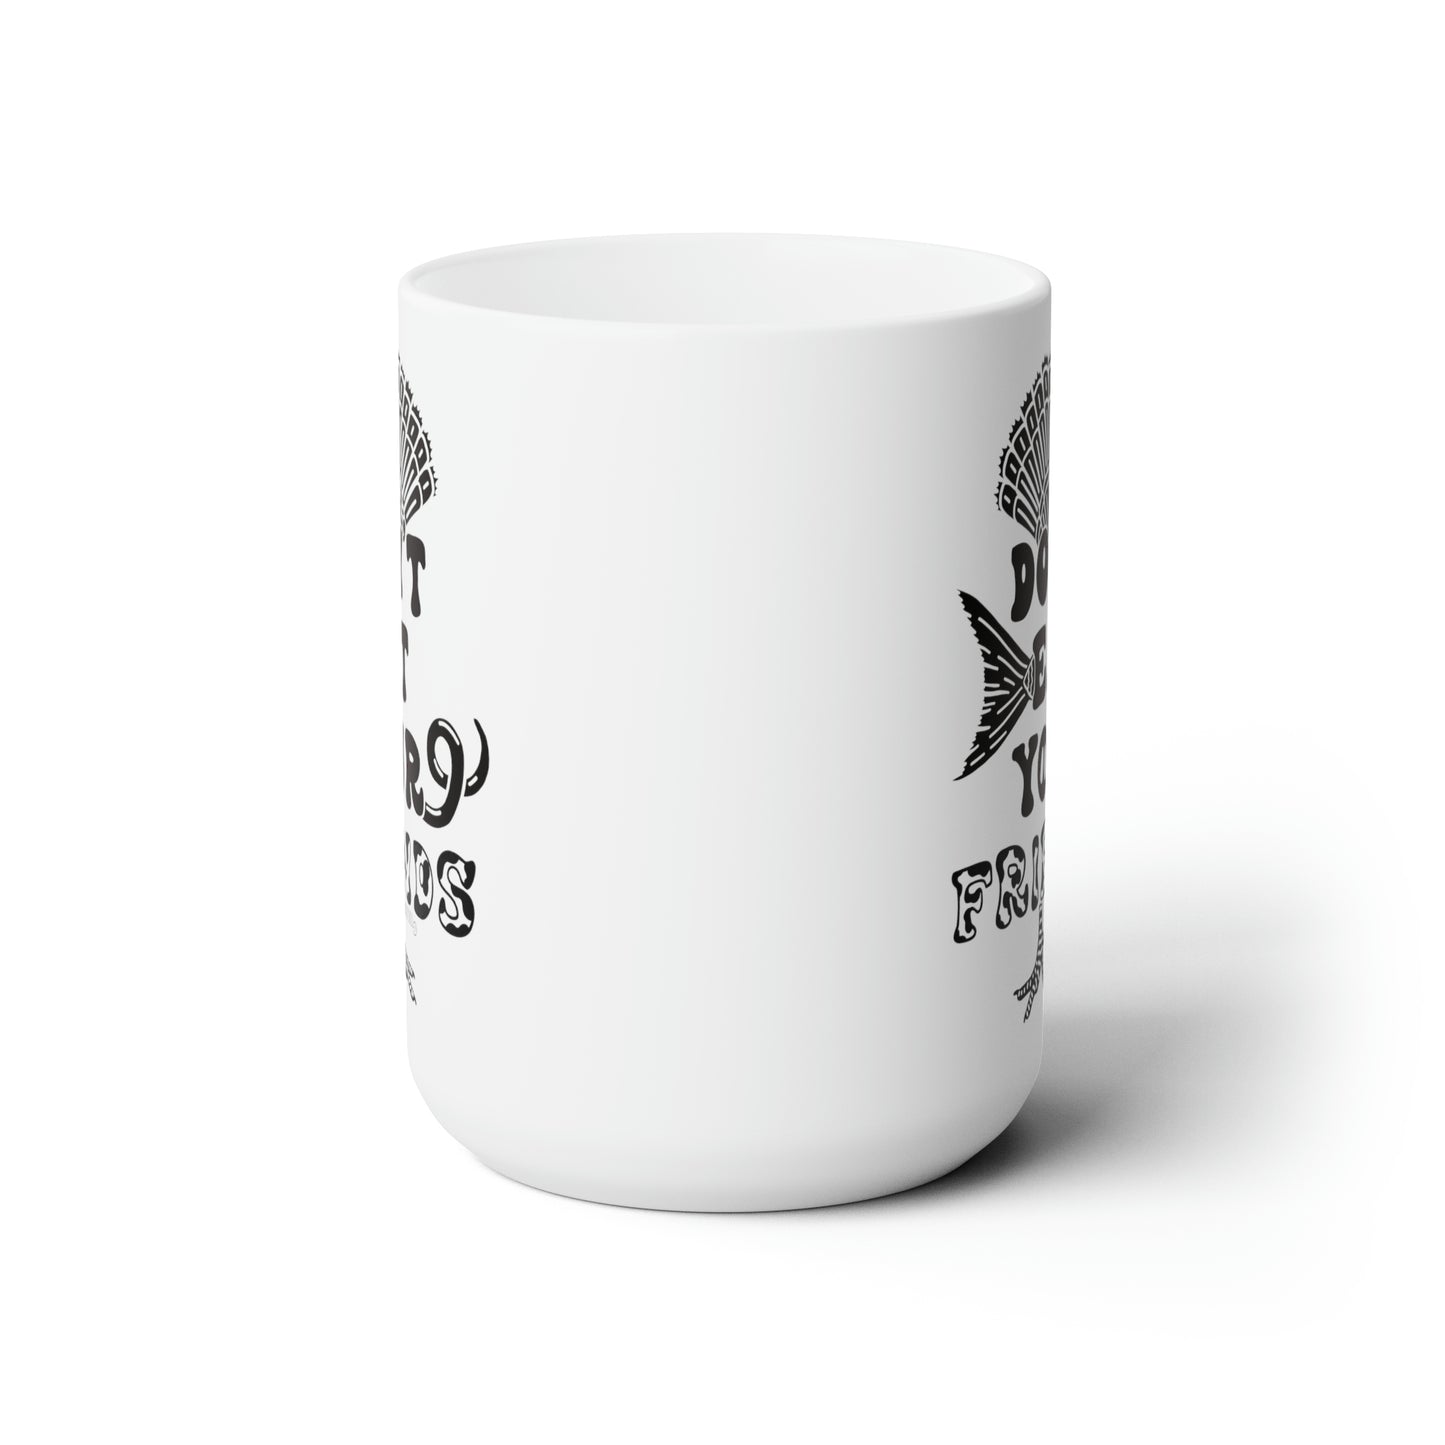 Don't Eat Your Friends - Ceramic Mug 15oz